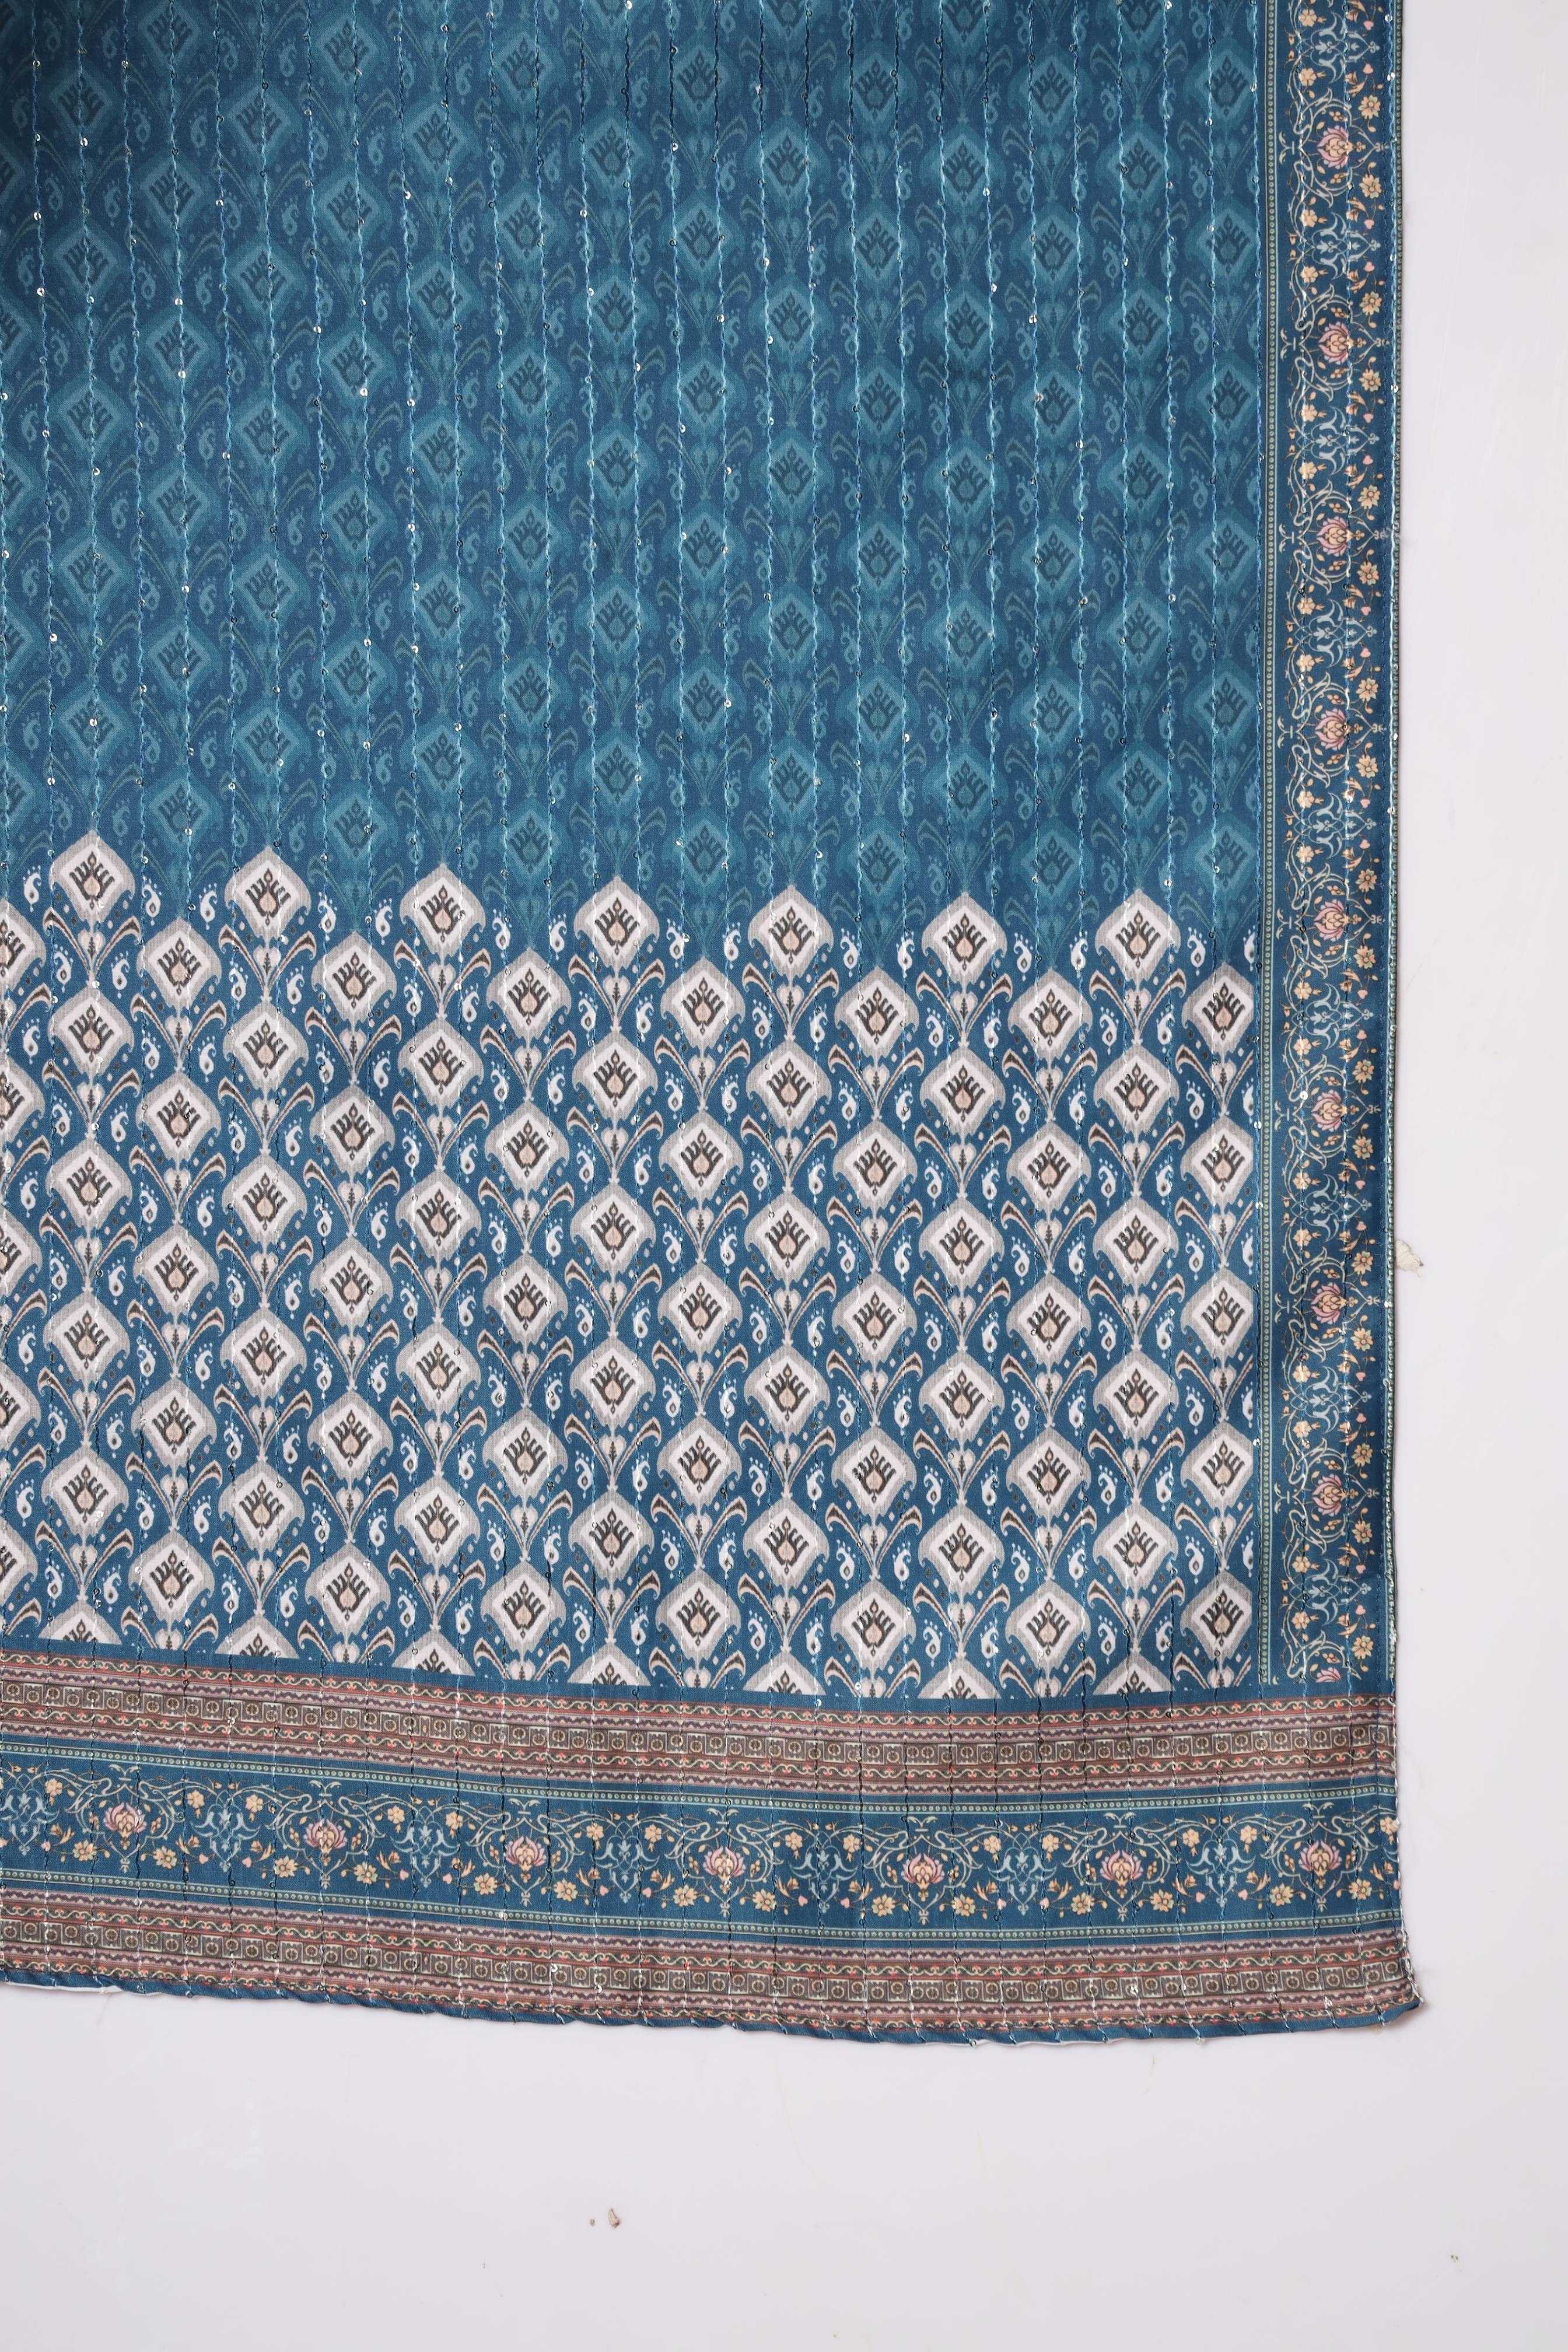 Embroidered Muslin Turquoise Blue Trendy Salwar Kameez For Women